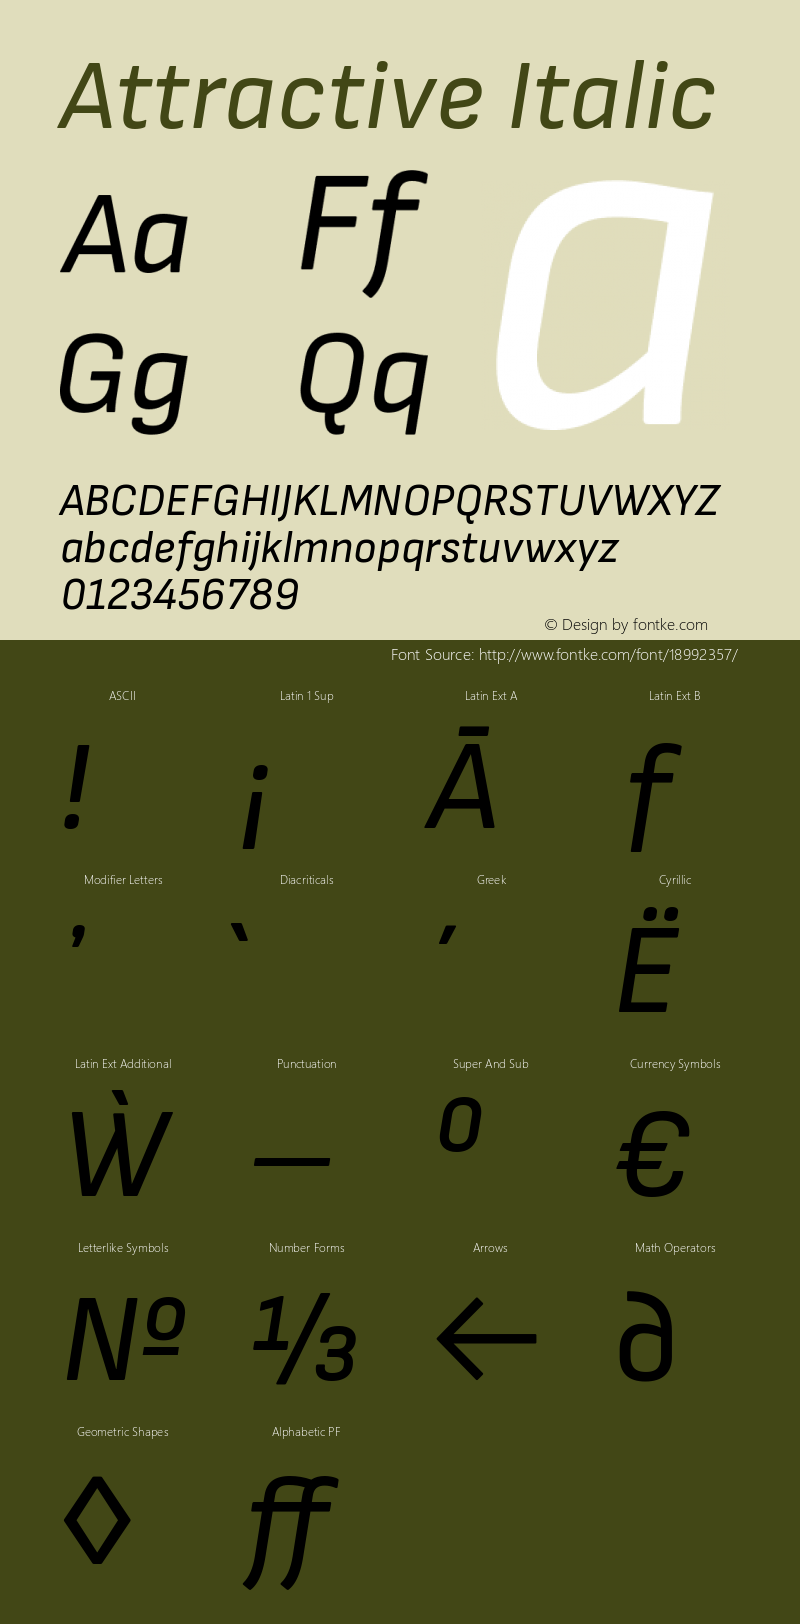 Attractive Italic Version 1.000 Font Sample